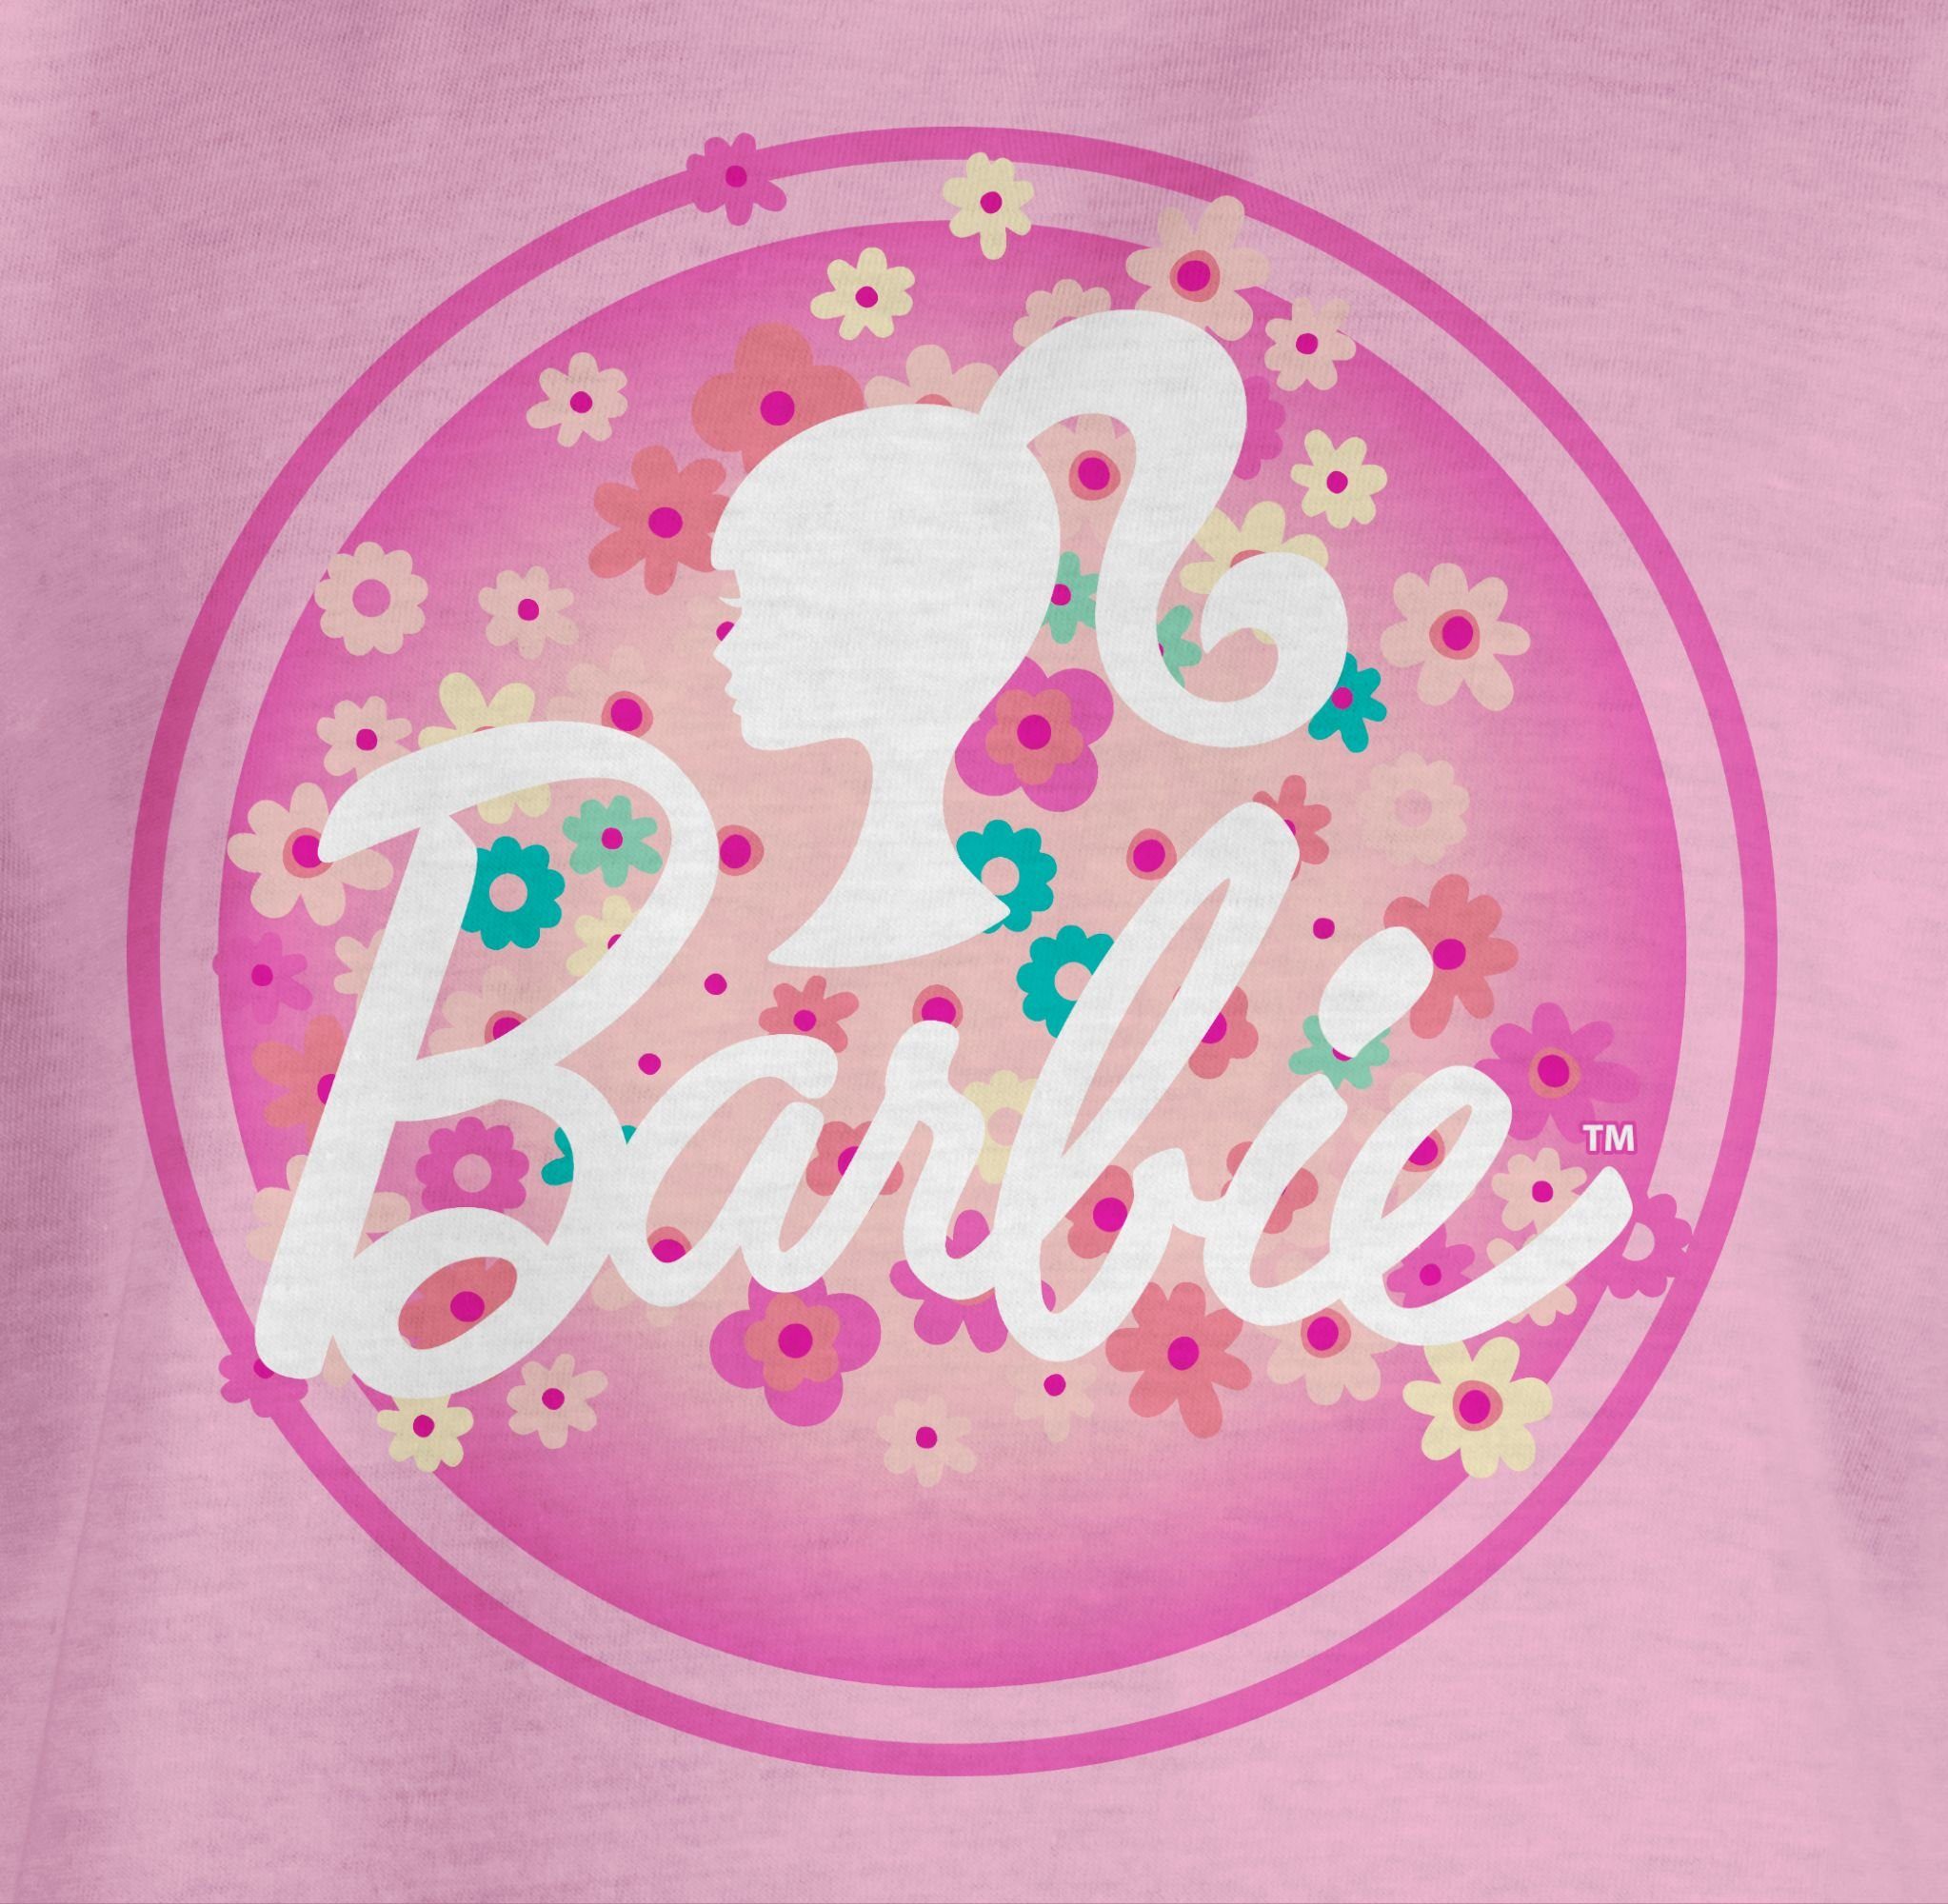 Mädchen Barbie Logo 1 T-Shirt Blumen Barbie Rosa Shirtracer